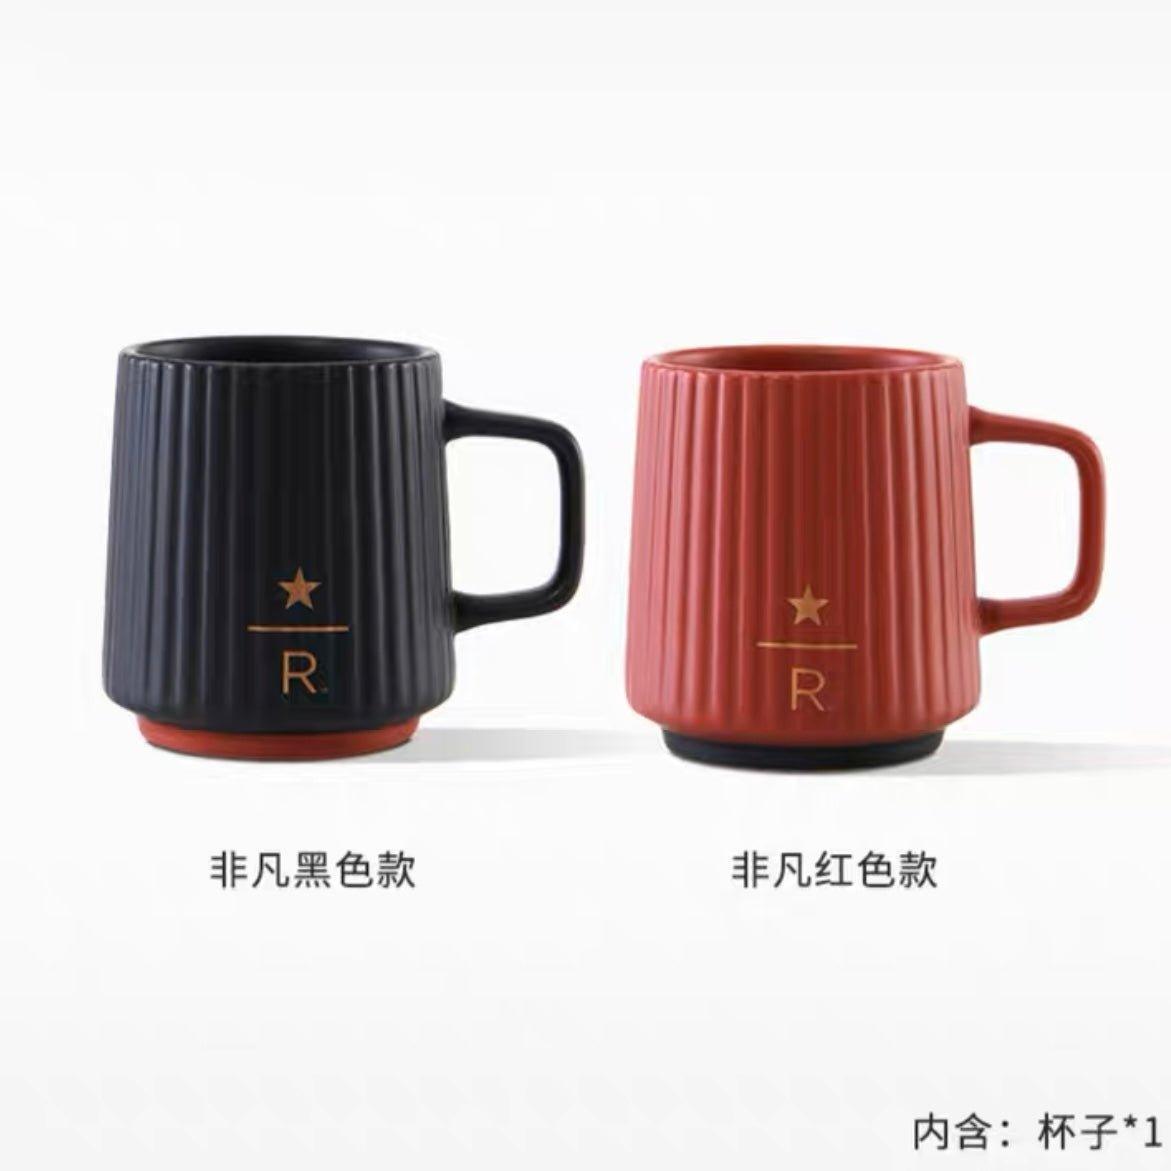 Starbucks Reserve Extraordinary Red/Black Ceramic Mug 330ml/11oz - Ann Ann Starbucks